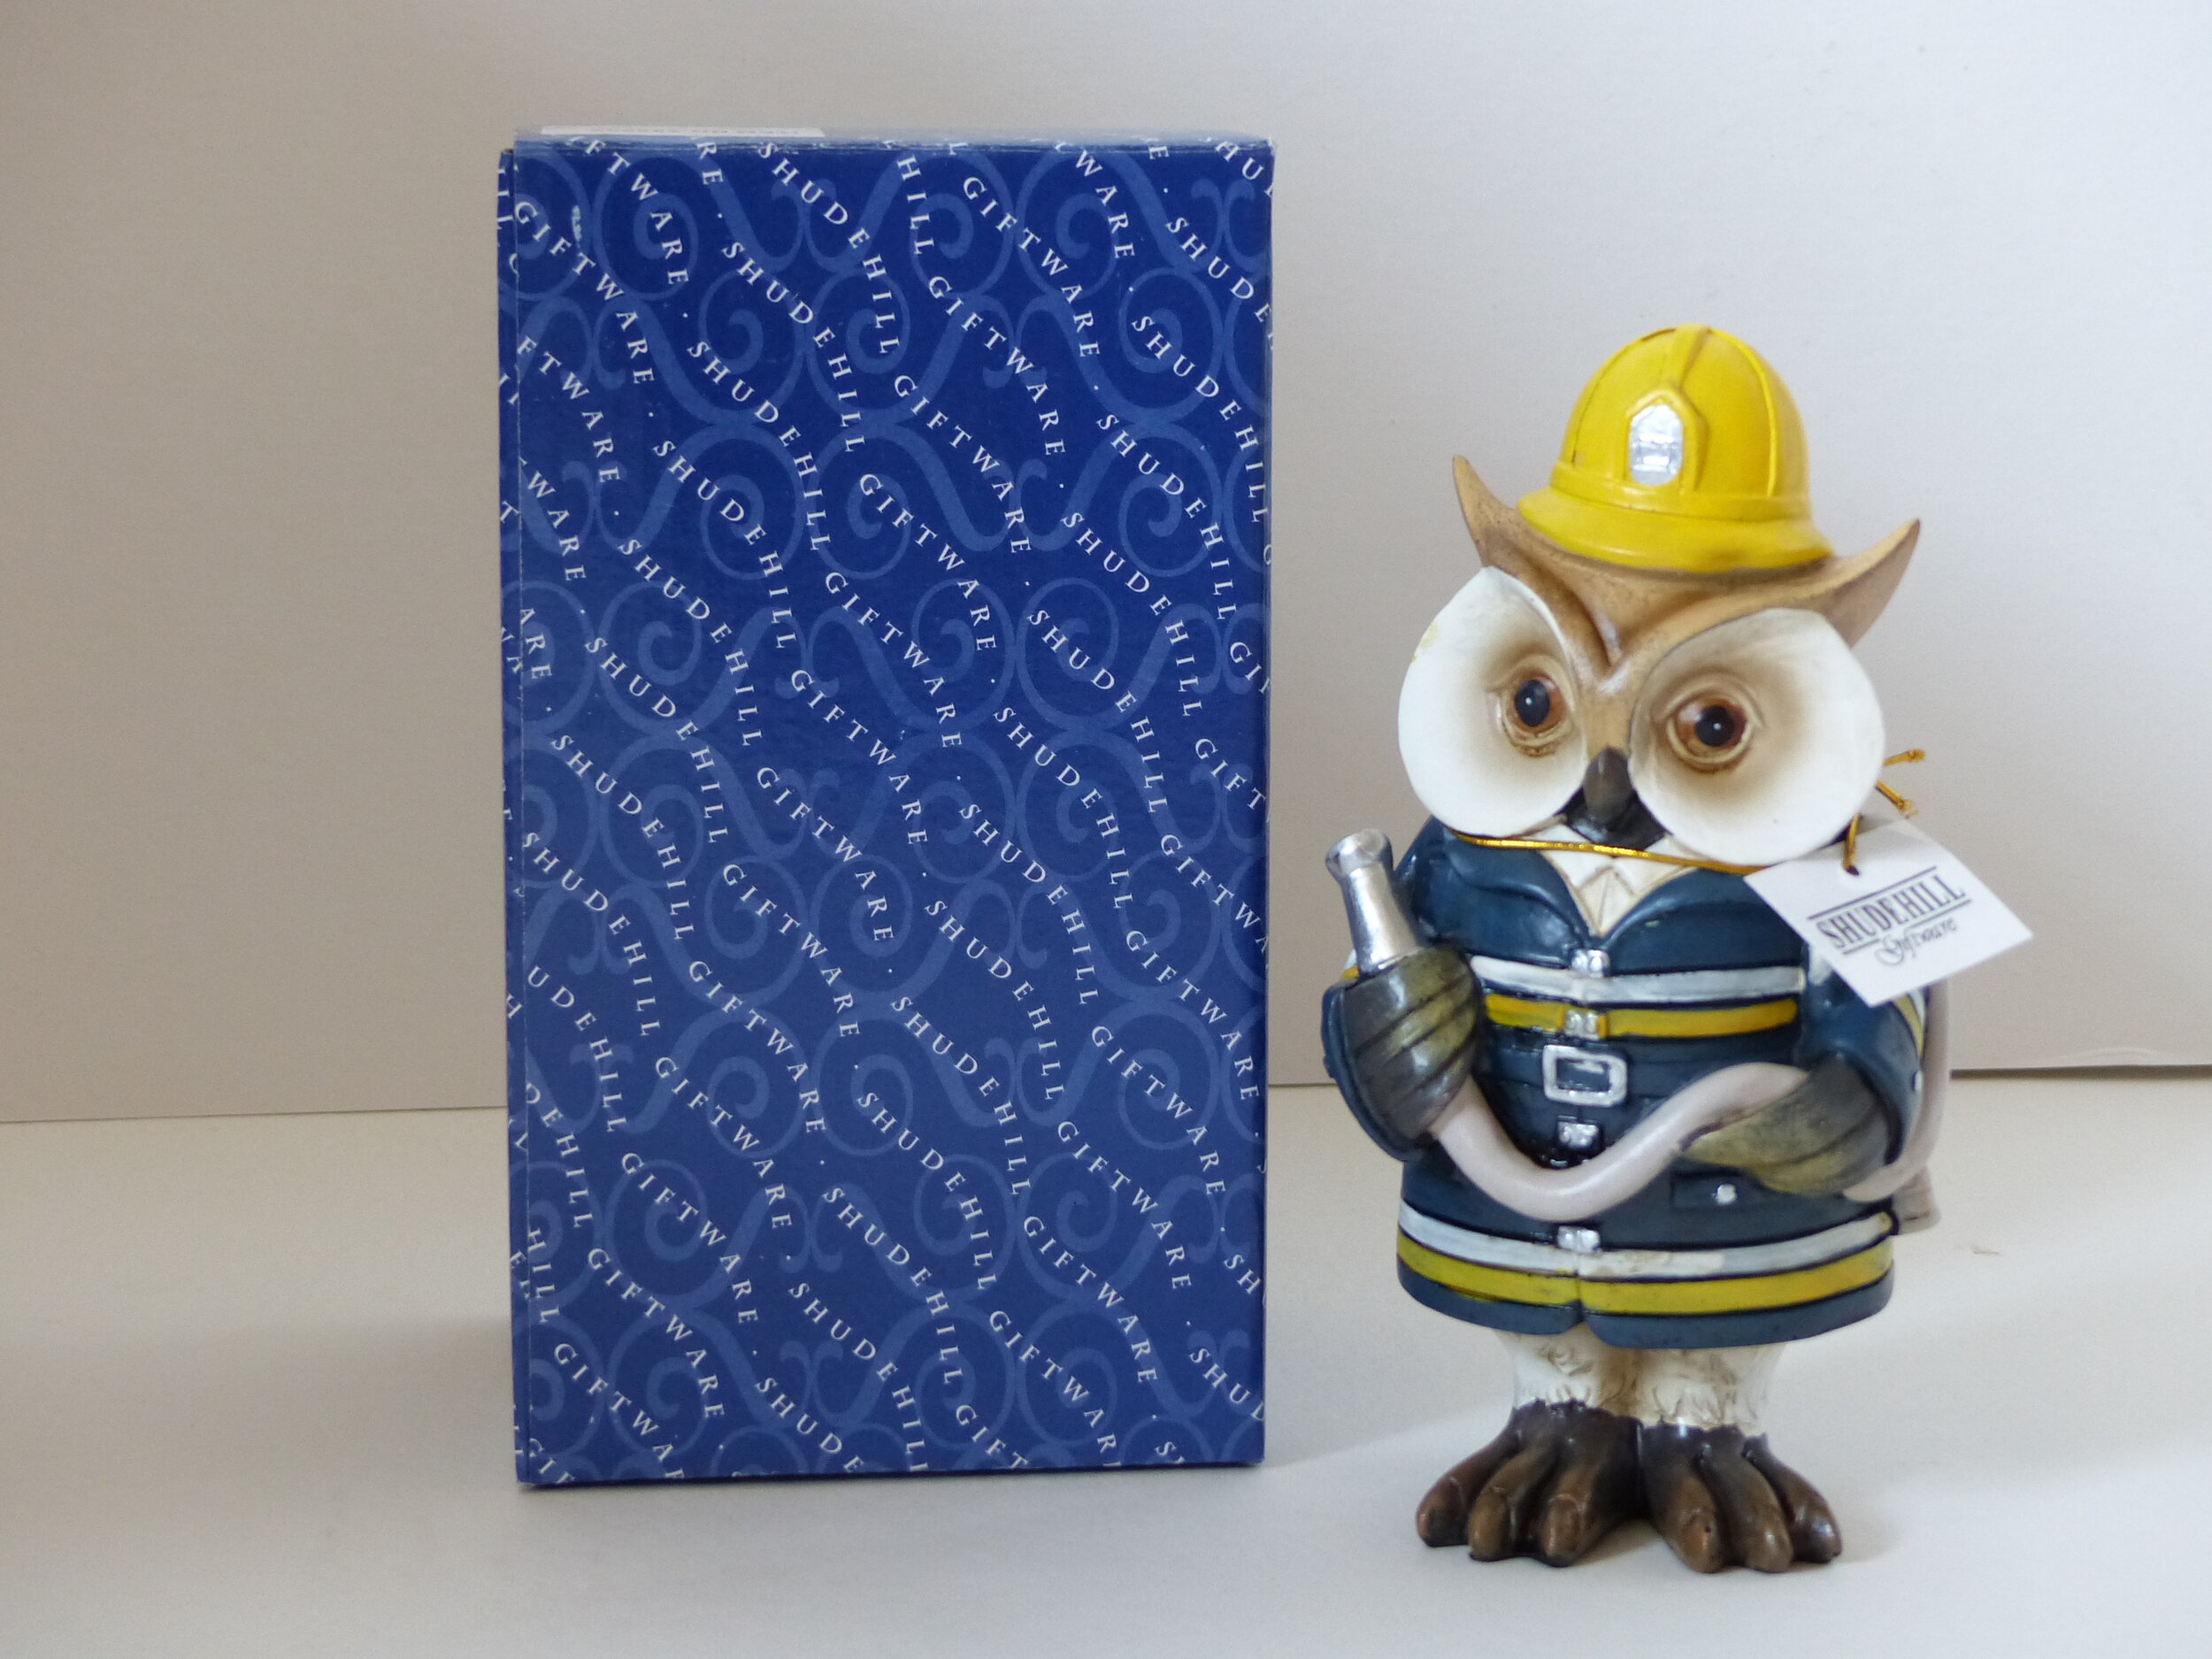 Shudehill Giftware Working Owl Golfer Ornament Figurine JD295682 